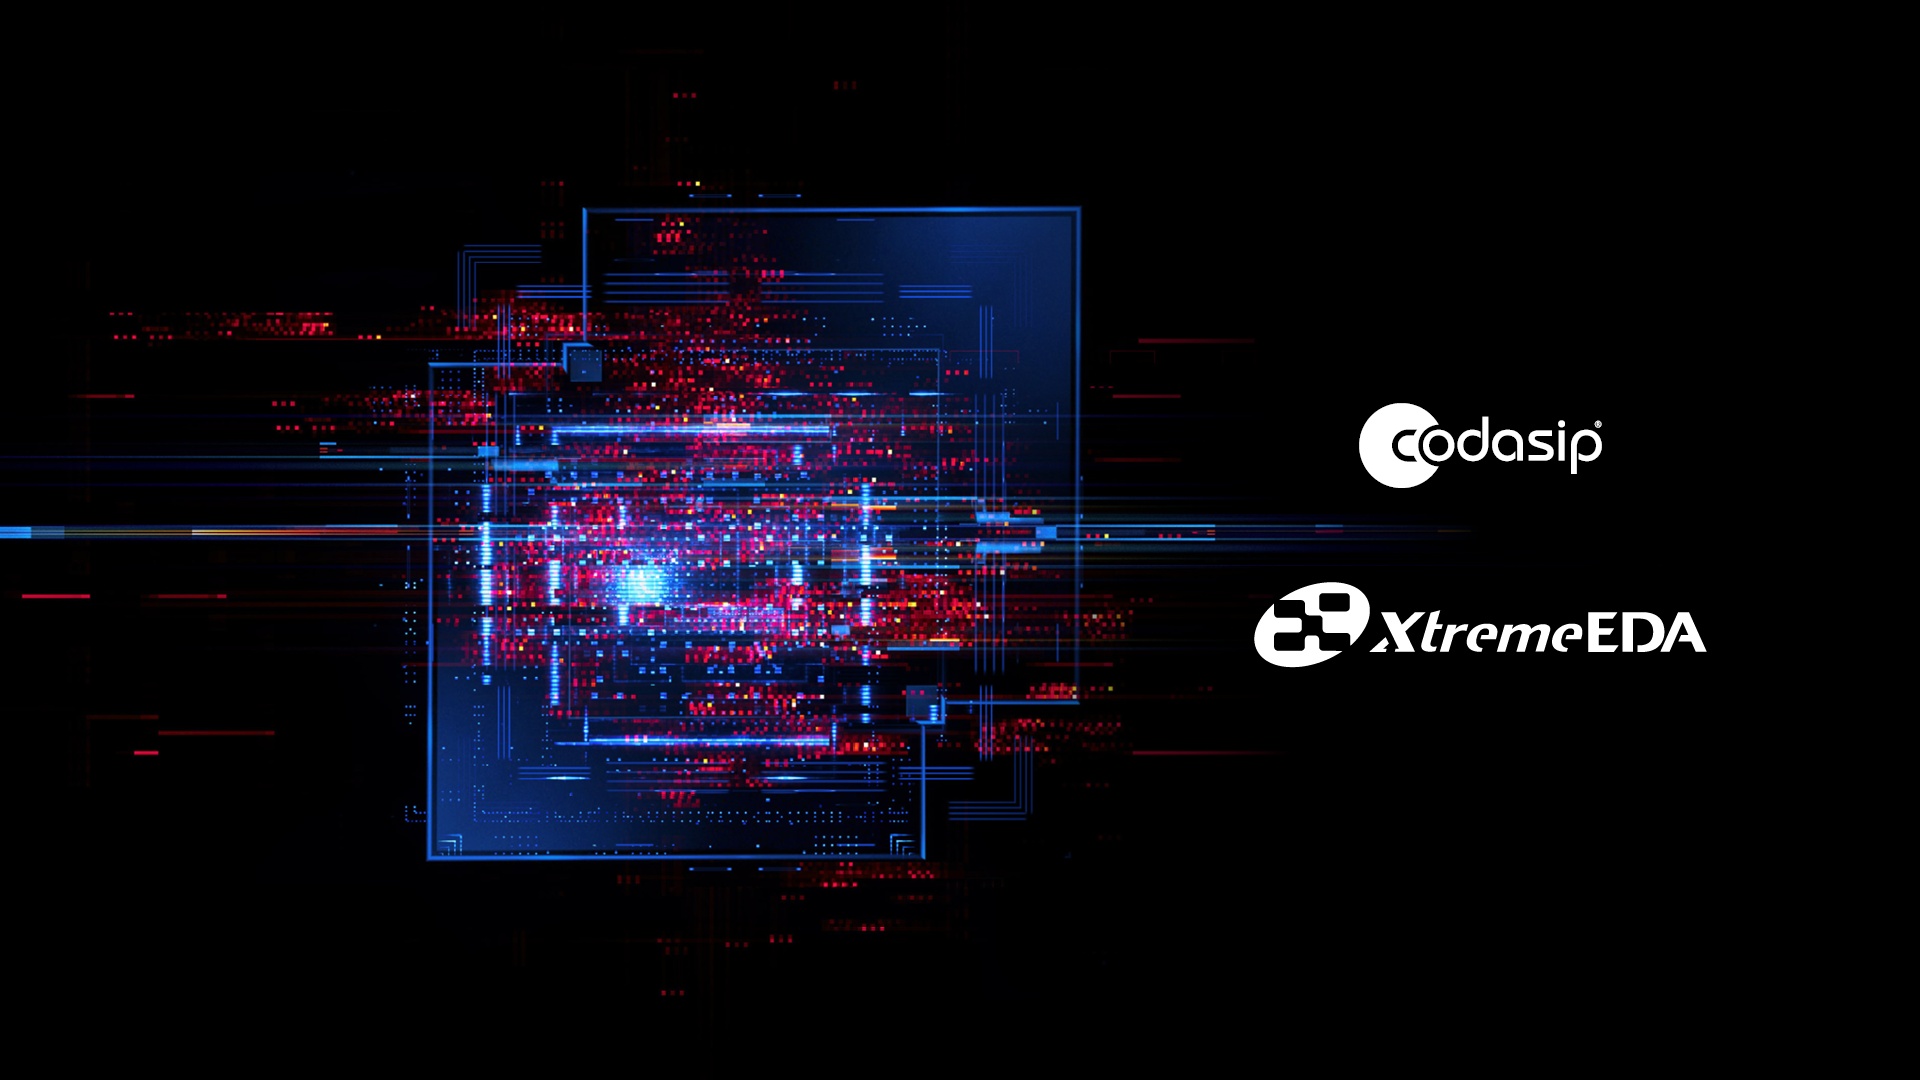 Codasip and XtremeEDA logos